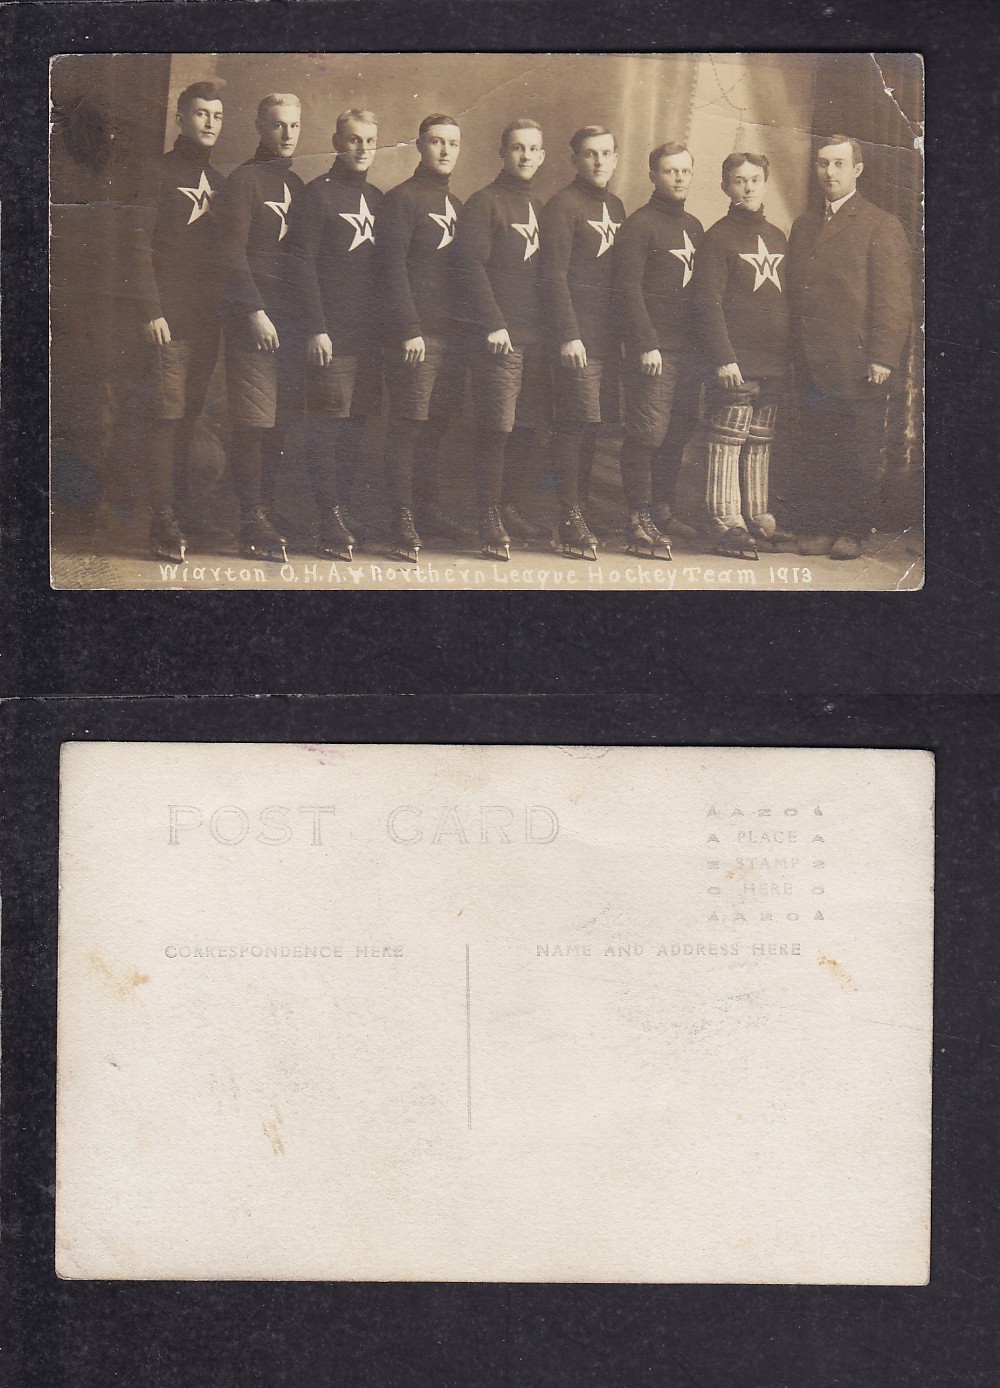 1913 WIARTON HOCKEY TEAM POST CARD photo